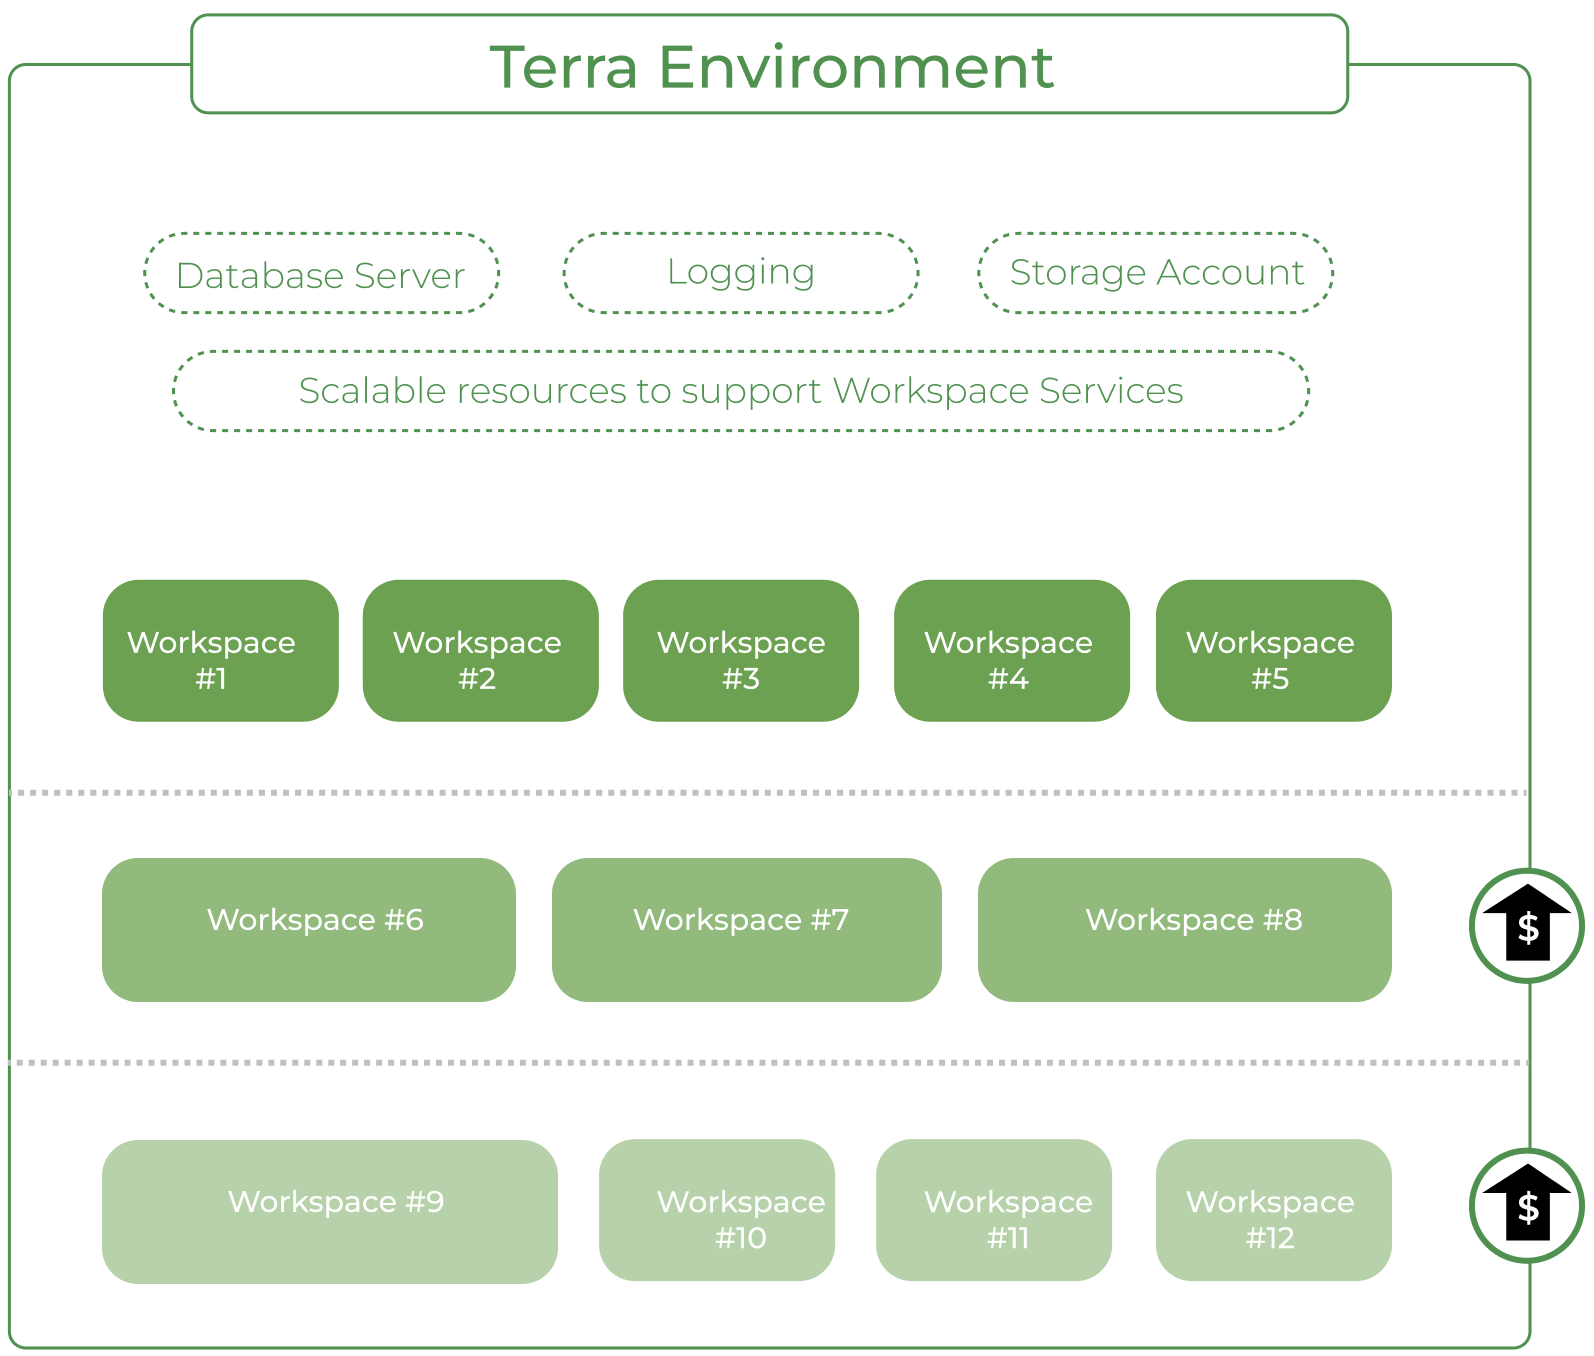 ToA_Terra-environment-cost-scaling_Diagram.png